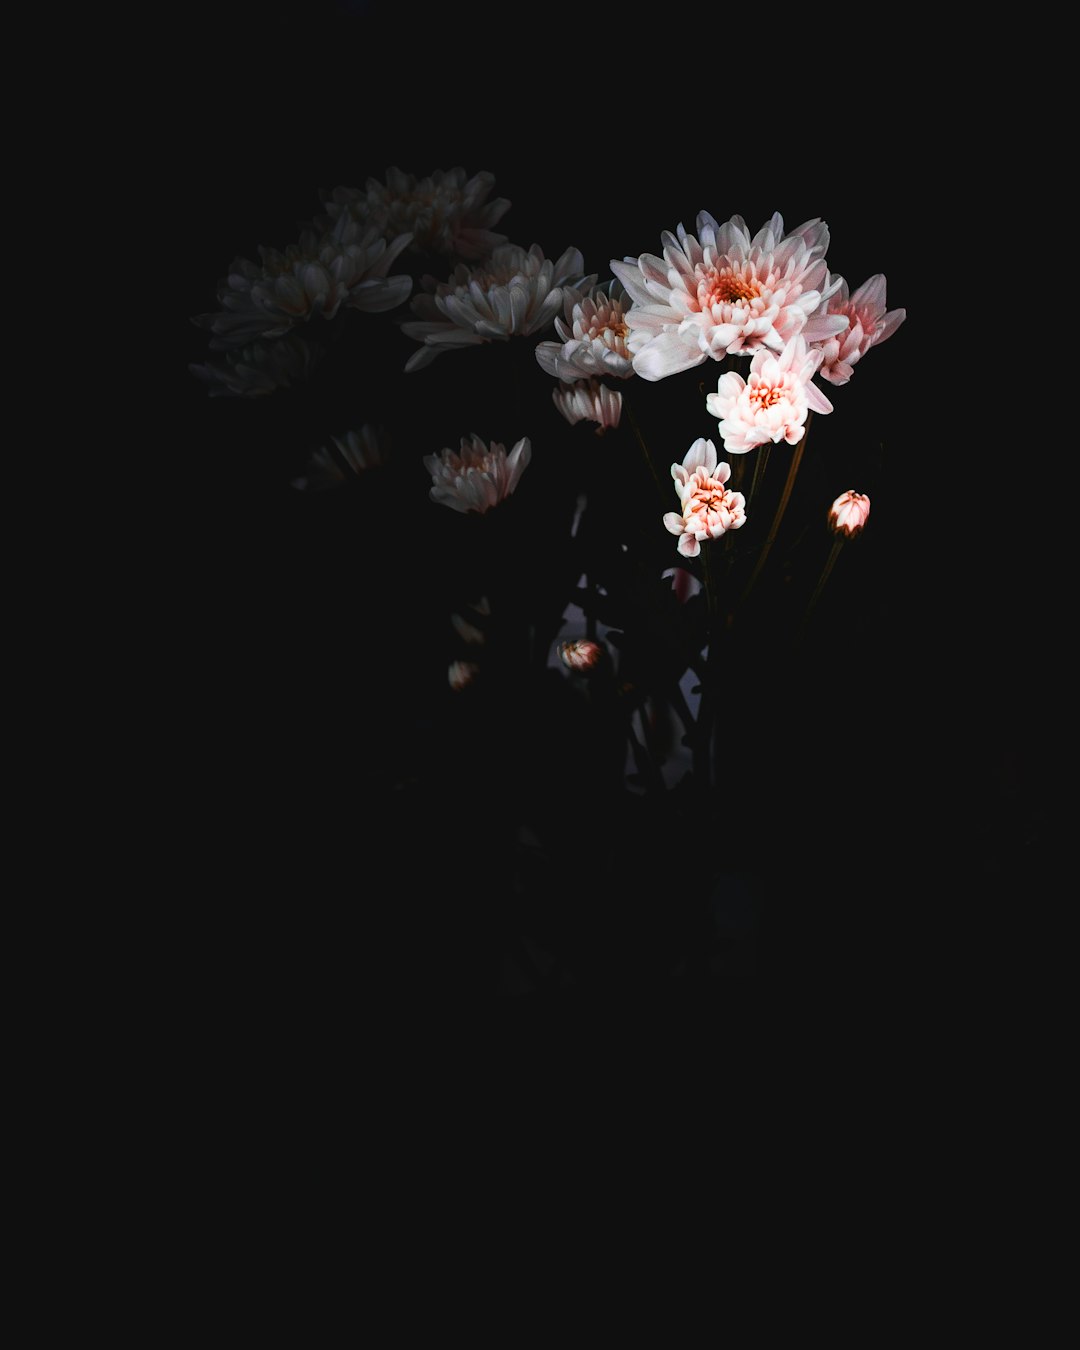 Black Flower Pictures [HD] | Download Free Images on Unsplash